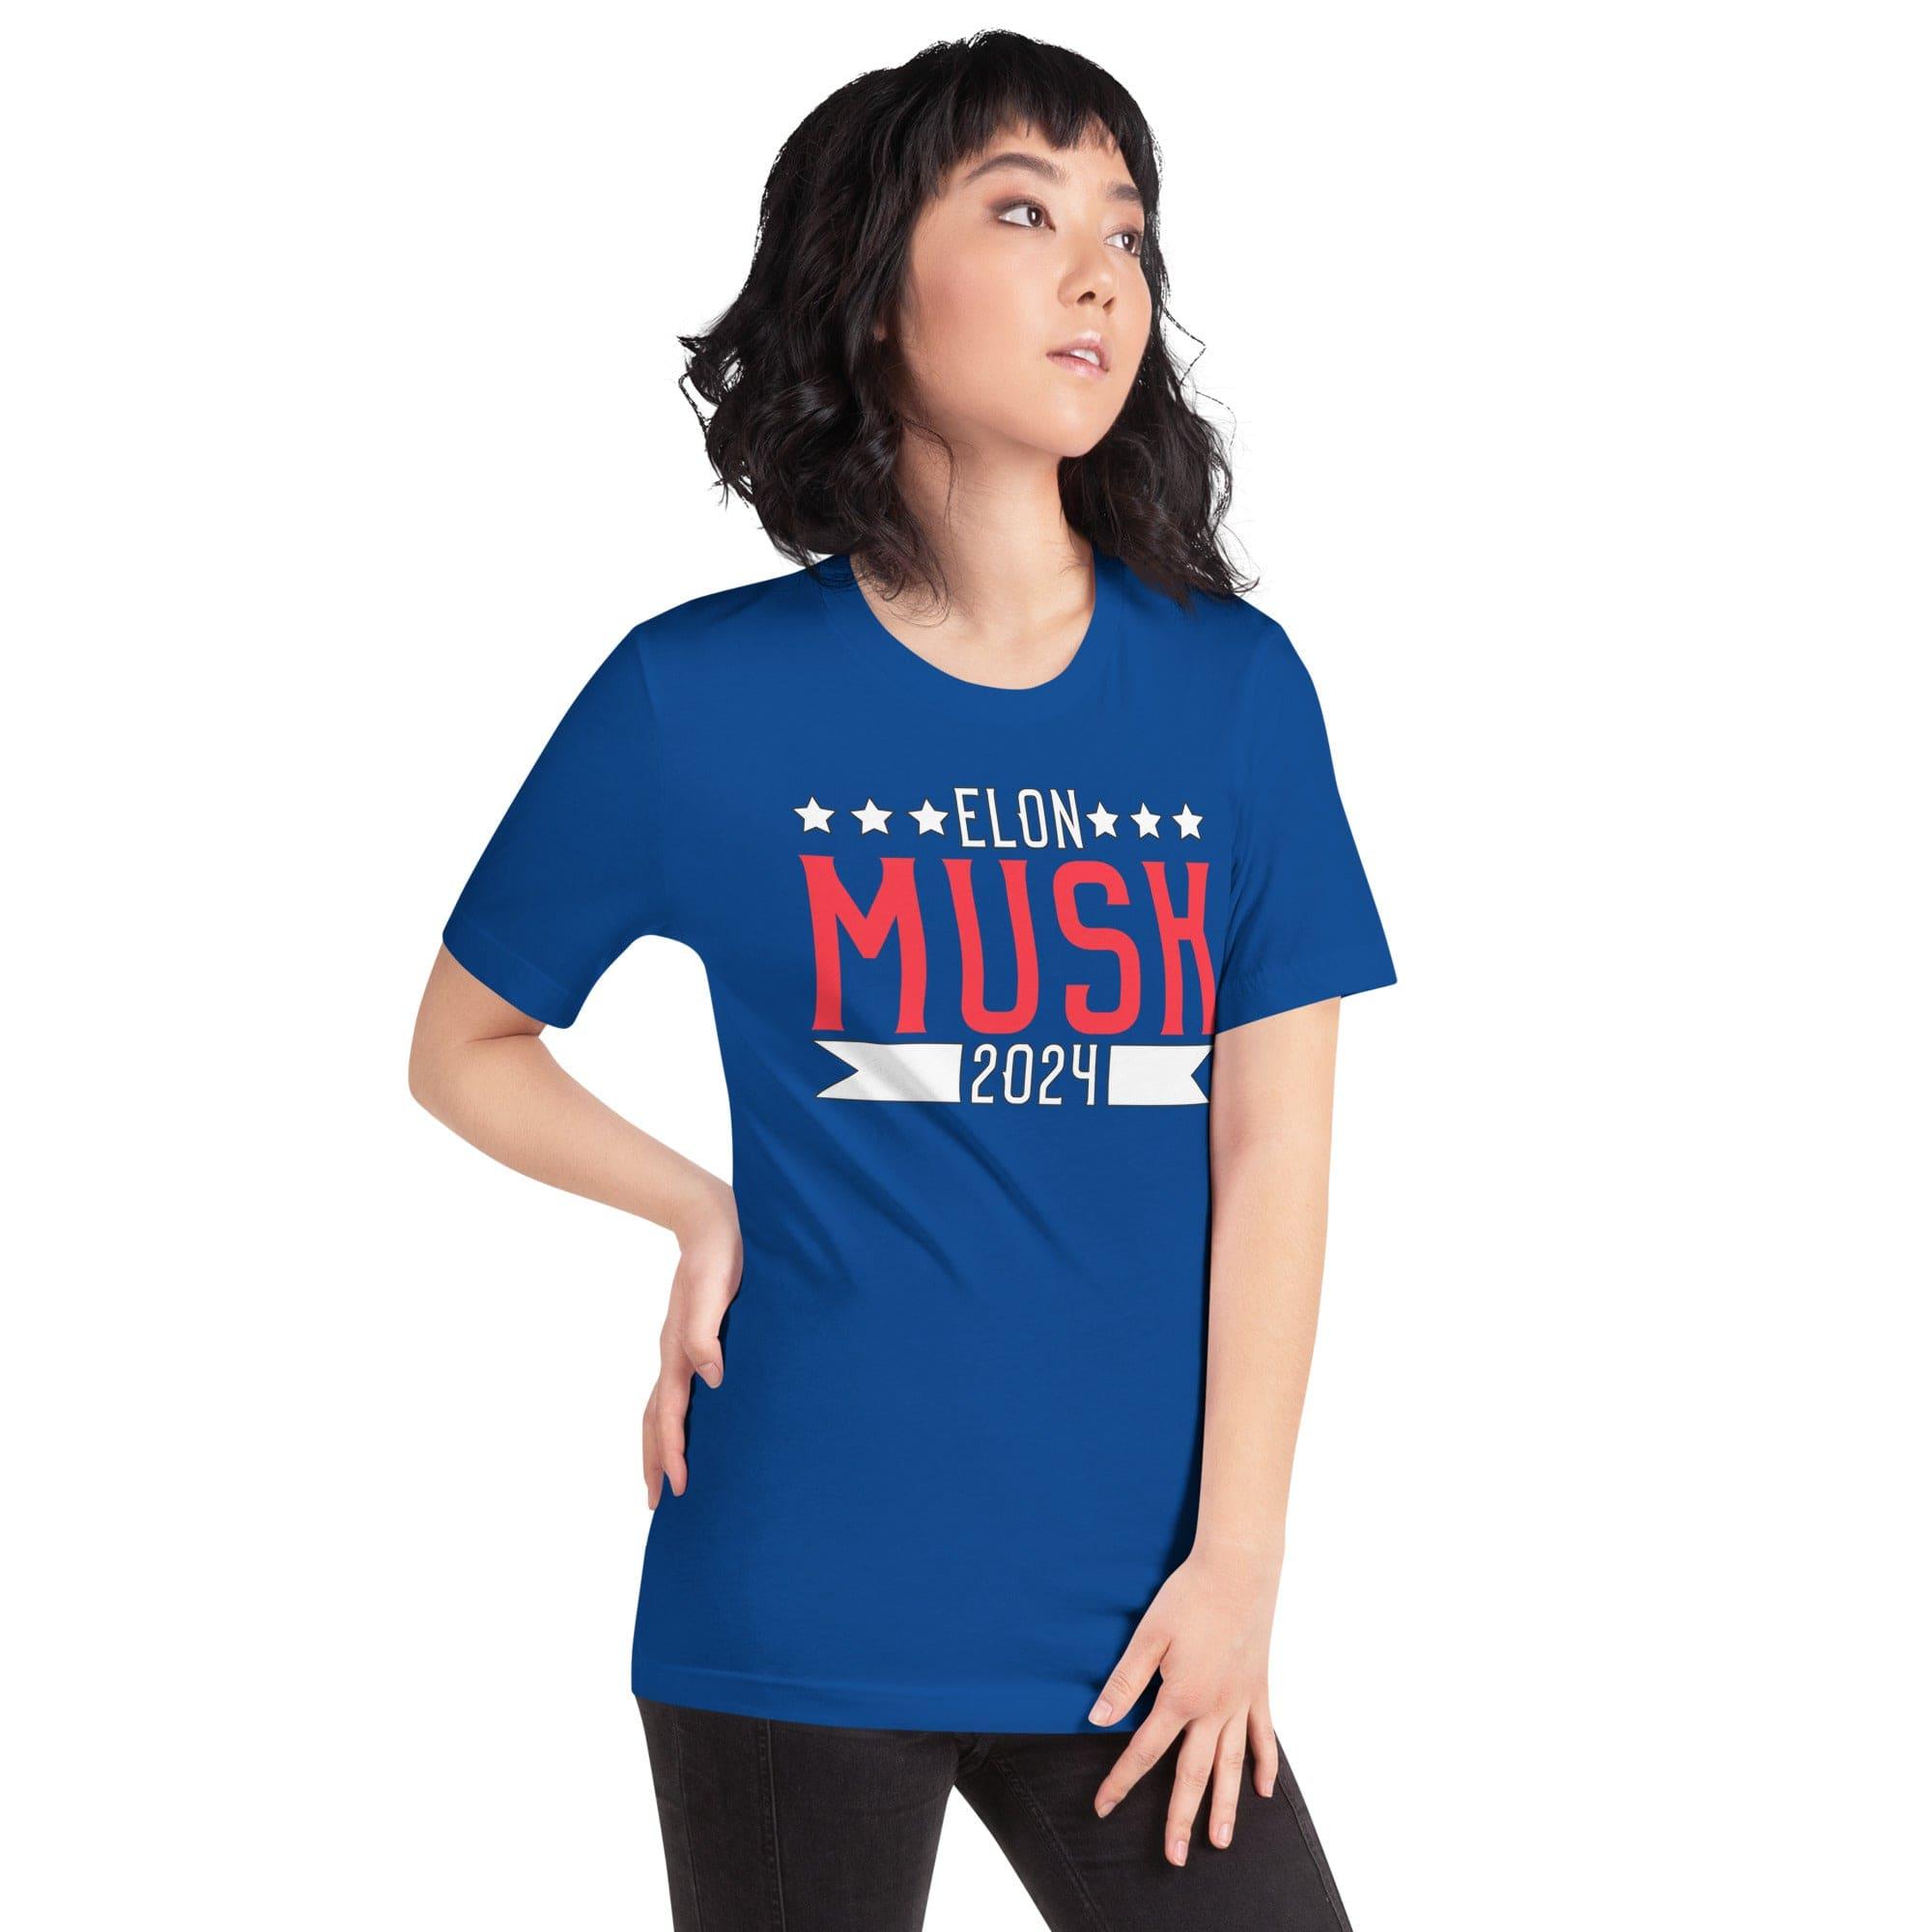 Political Humor T-Shirt Elon Musk 2024 Short Sleeve Unisex - TopKoalaTee